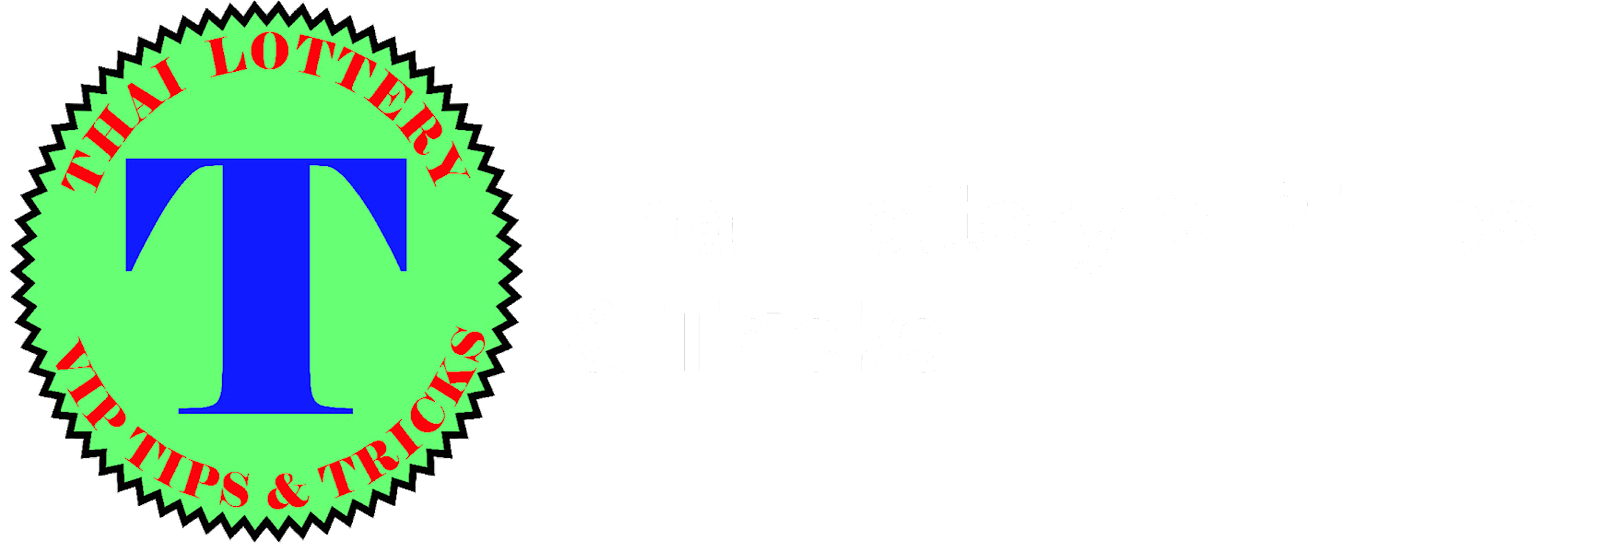 Thai Lottery VIP Tips & Tricks